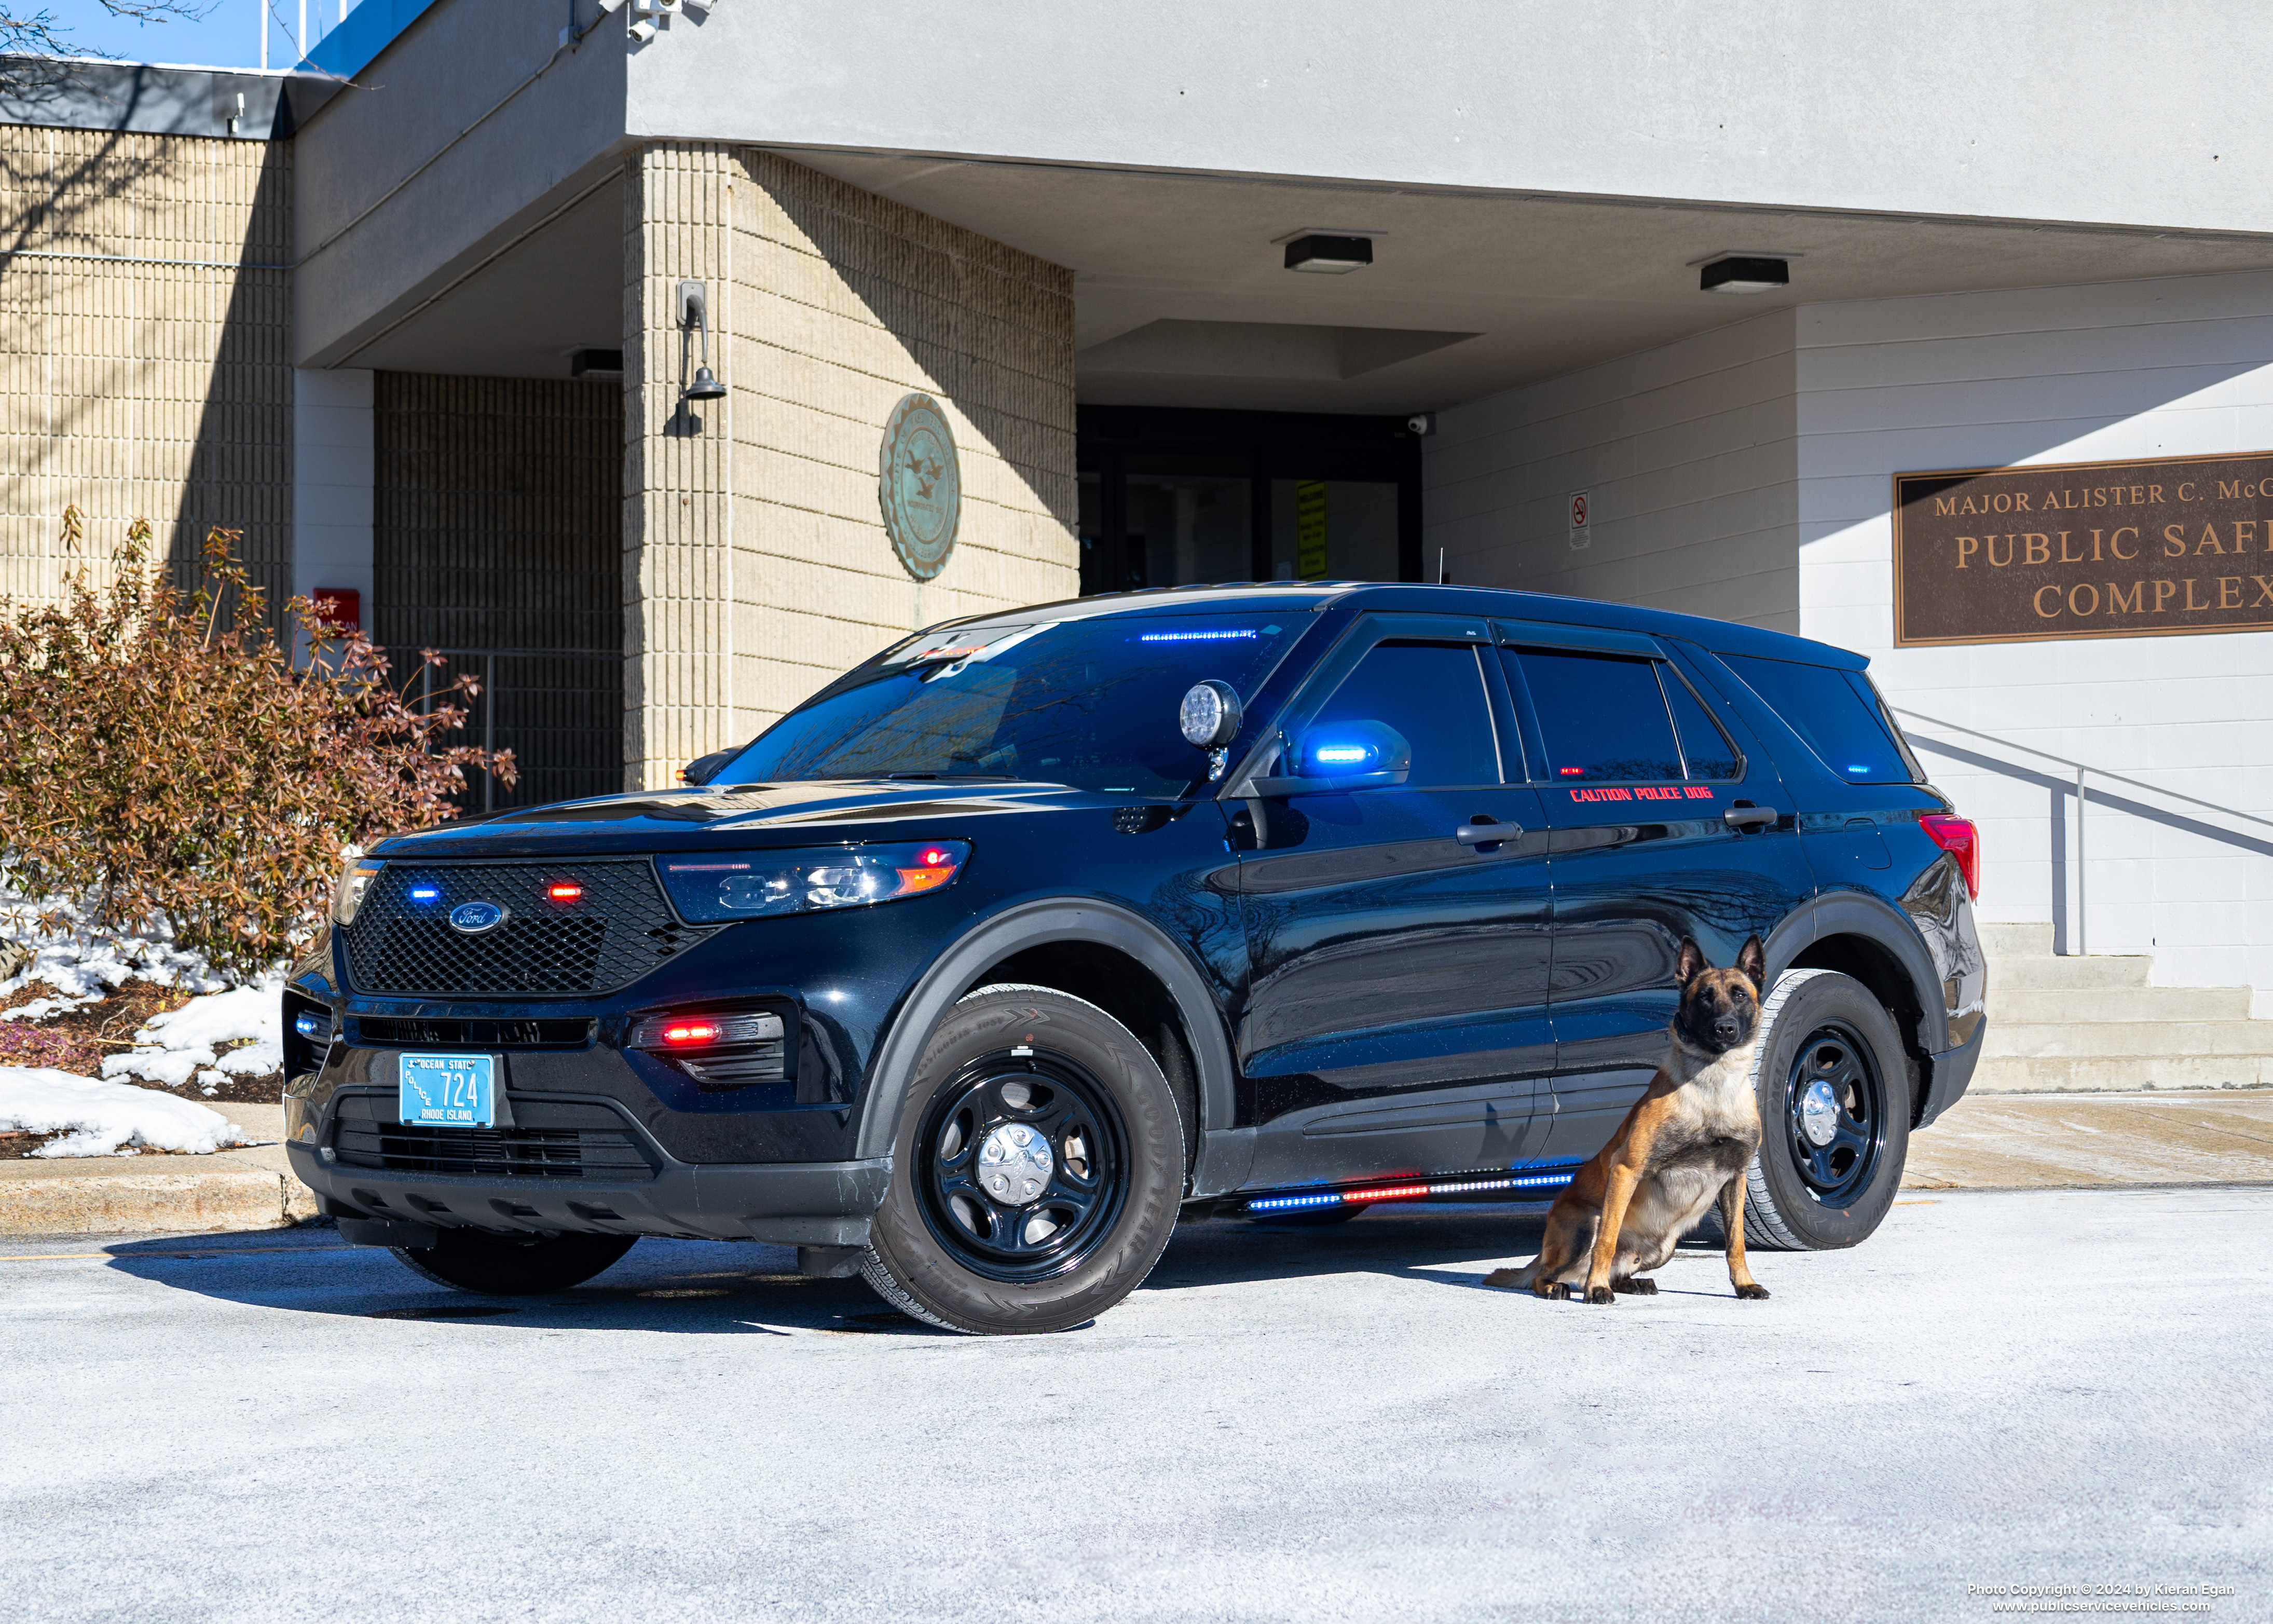 A photo  of East Providence Police
            Car [2]34, a 2021 Ford Police Interceptor Utility             taken by Kieran Egan